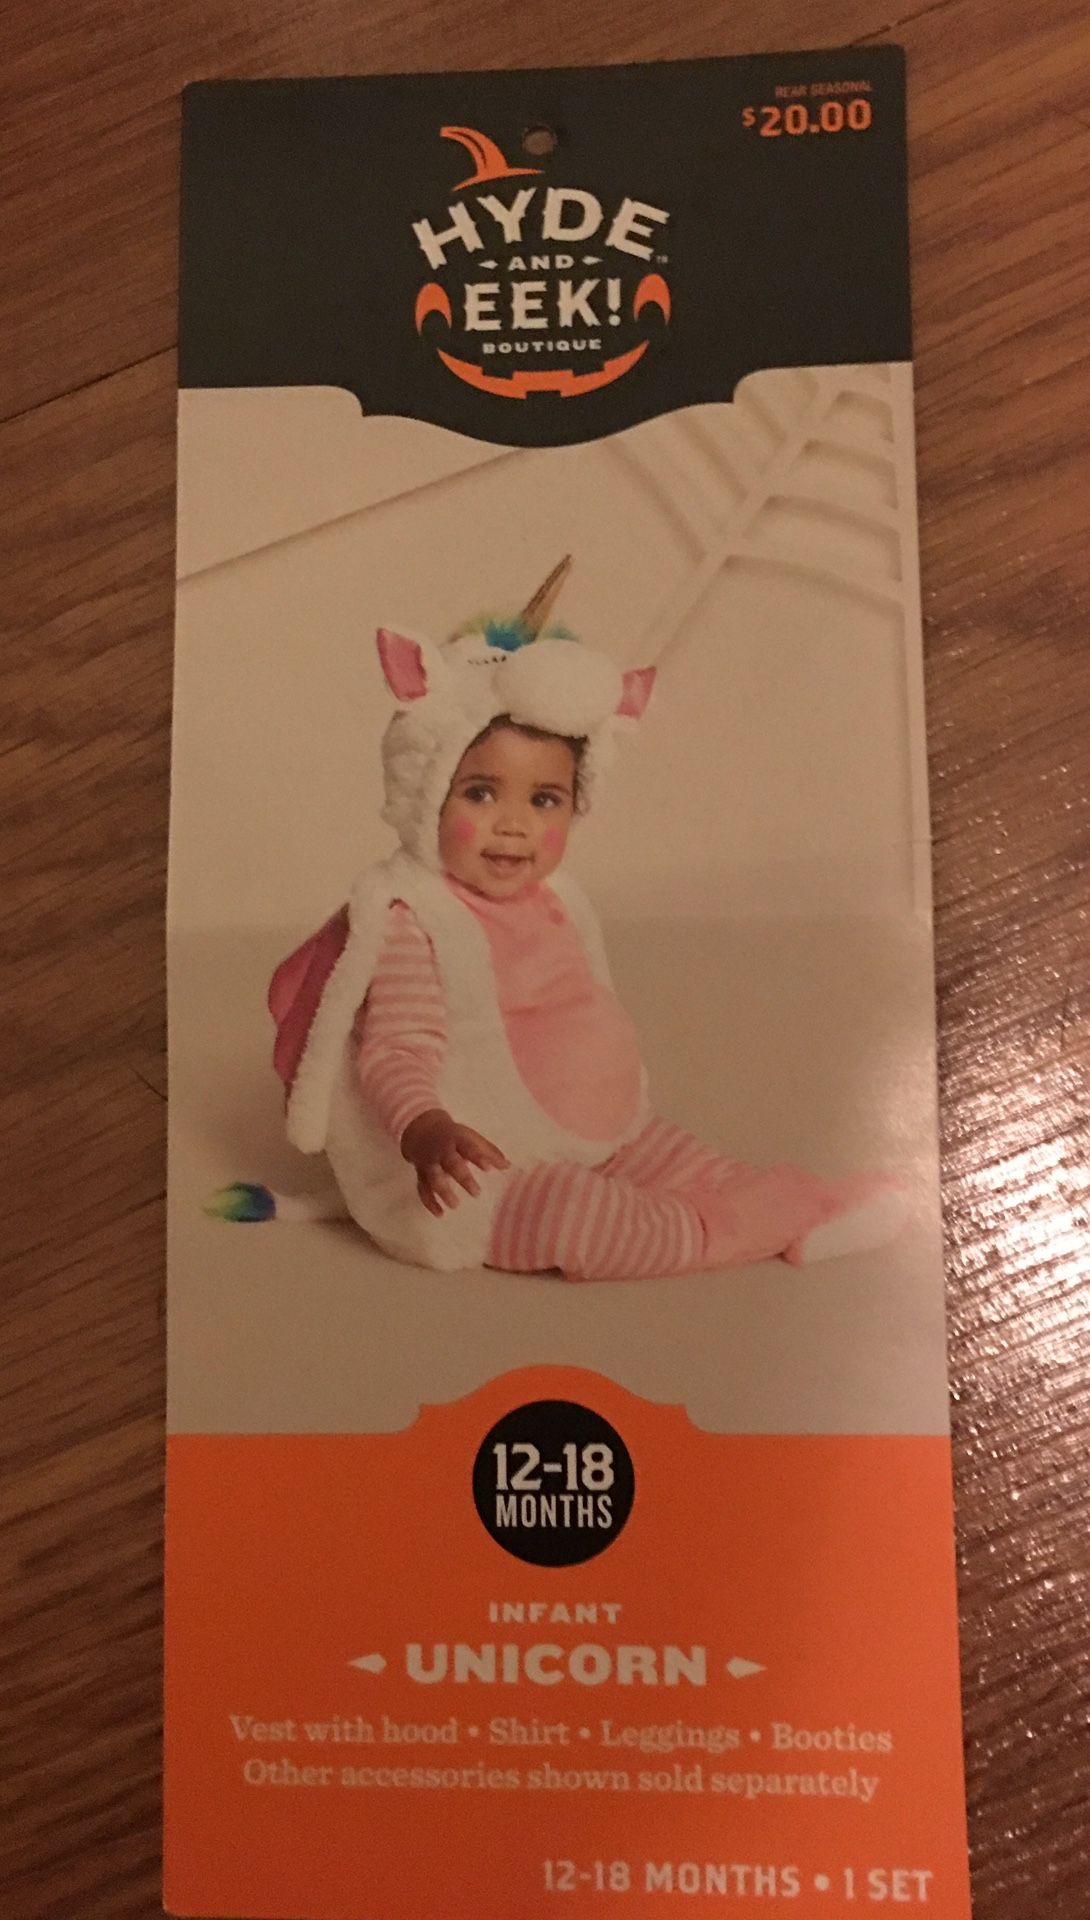 Infant unicorn costume